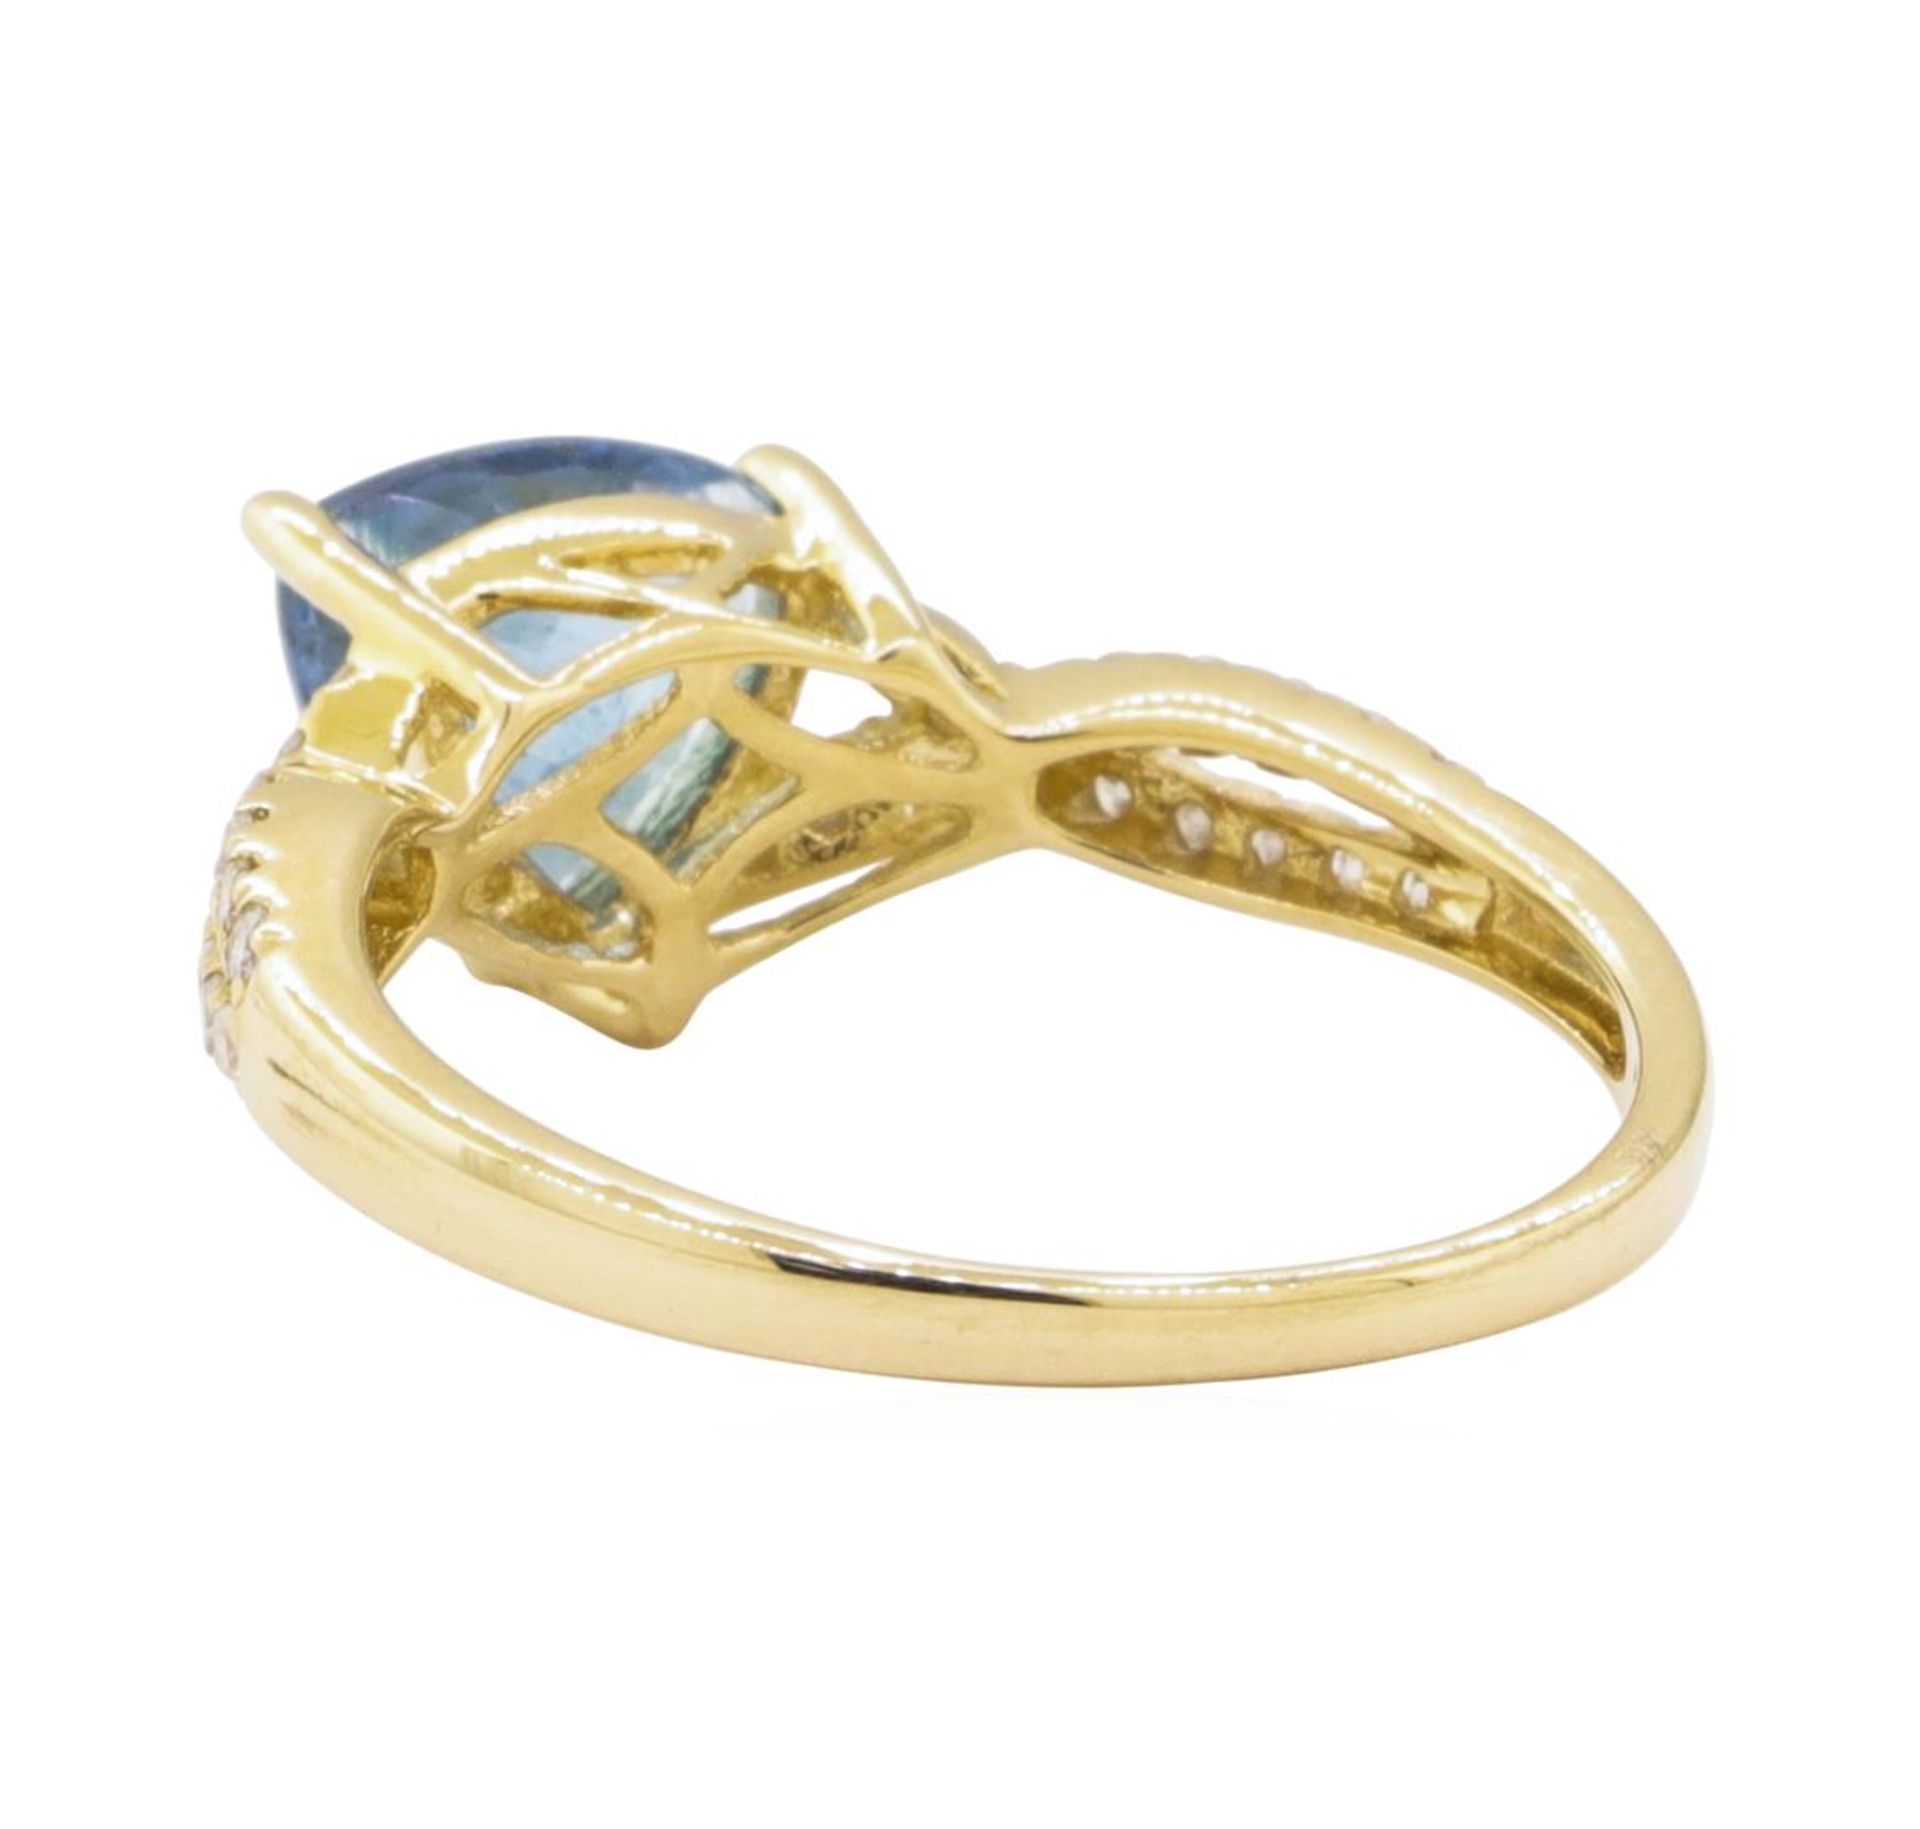 1.23ct Aquamarine and Diamond Ring - 14KT Yellow Gold - Image 3 of 5